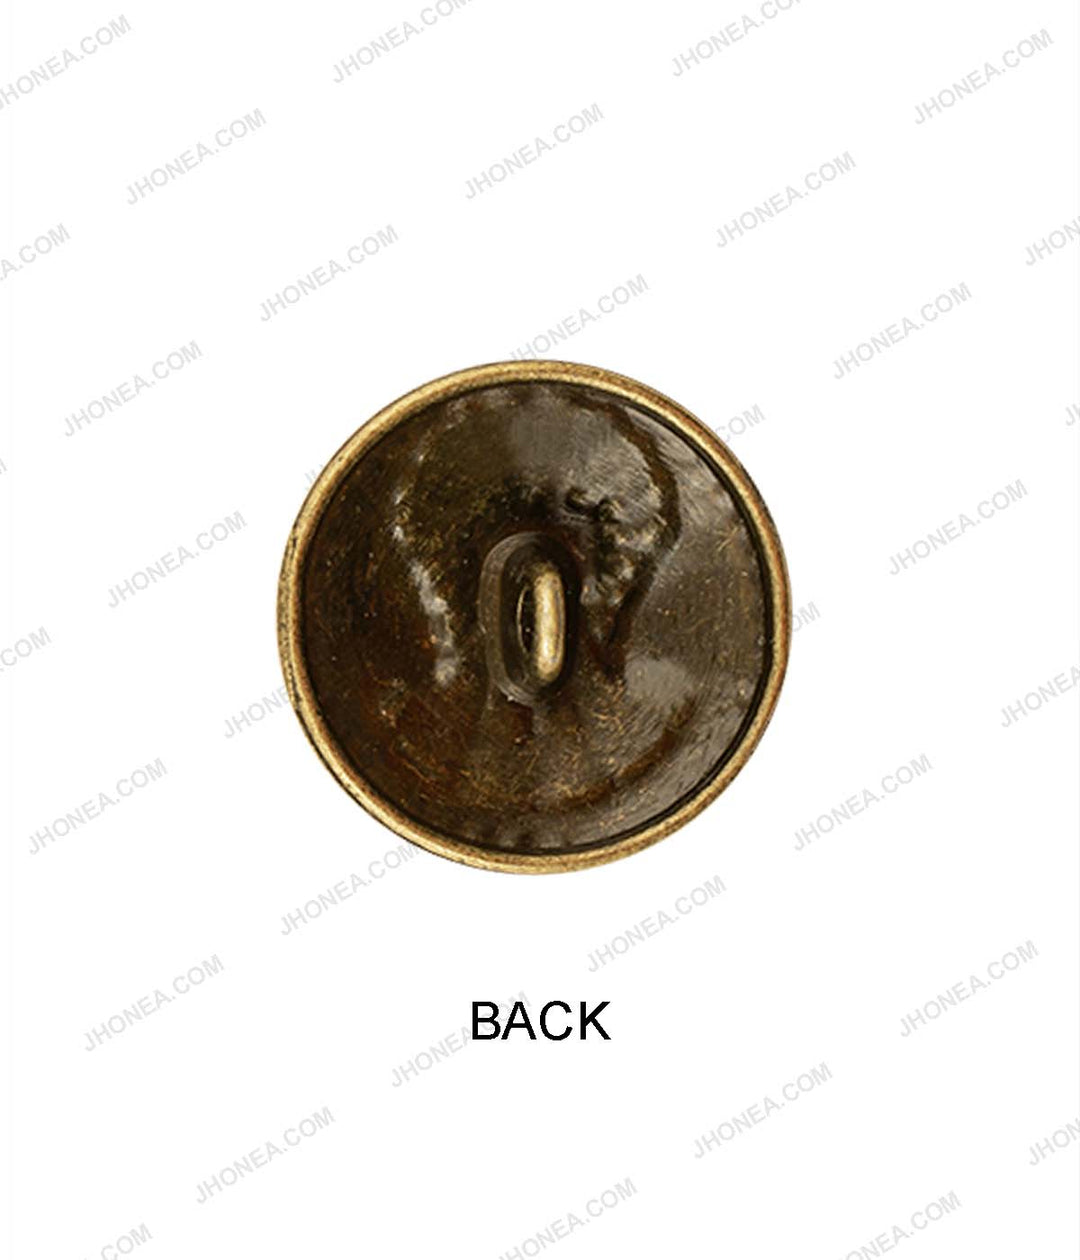 Regal Design Antique Brass with Enamel Surface Jacket Buttons